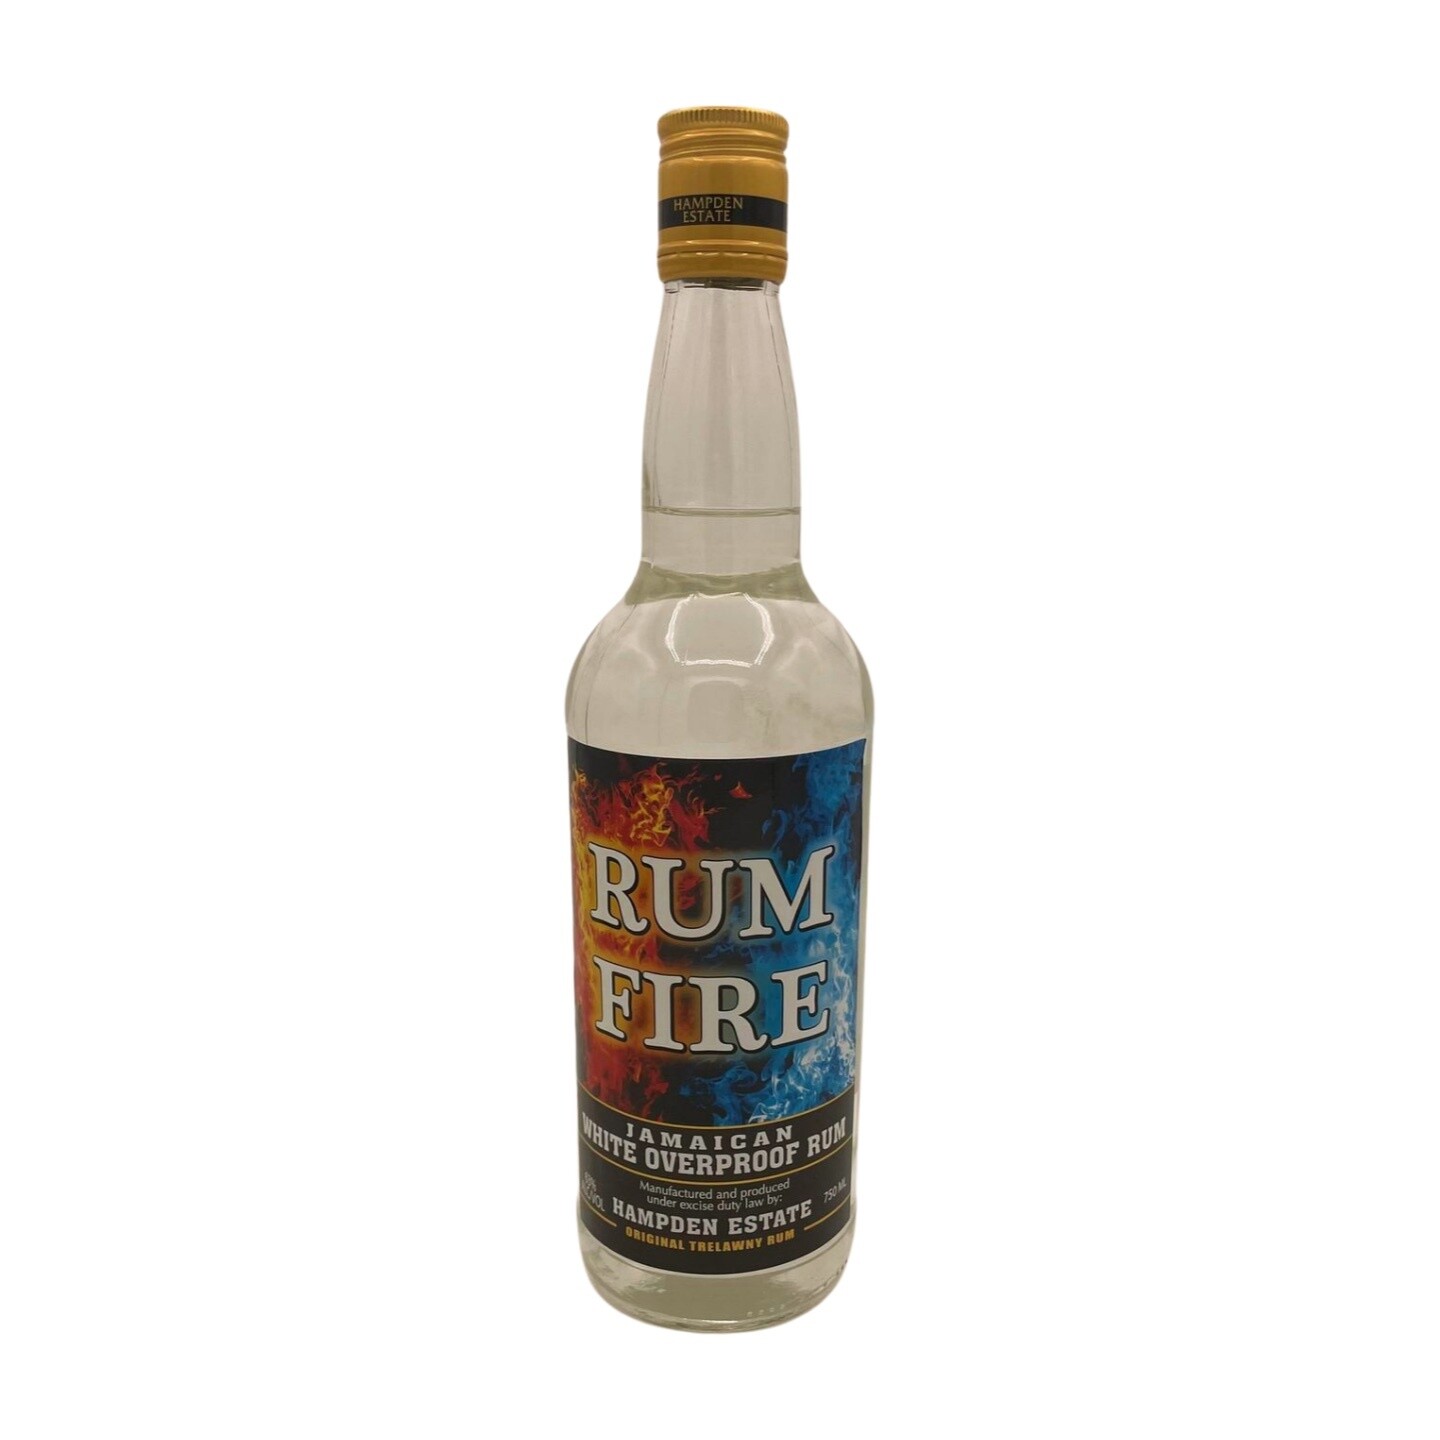 Rum Fire Jamaican White Overproof Rum